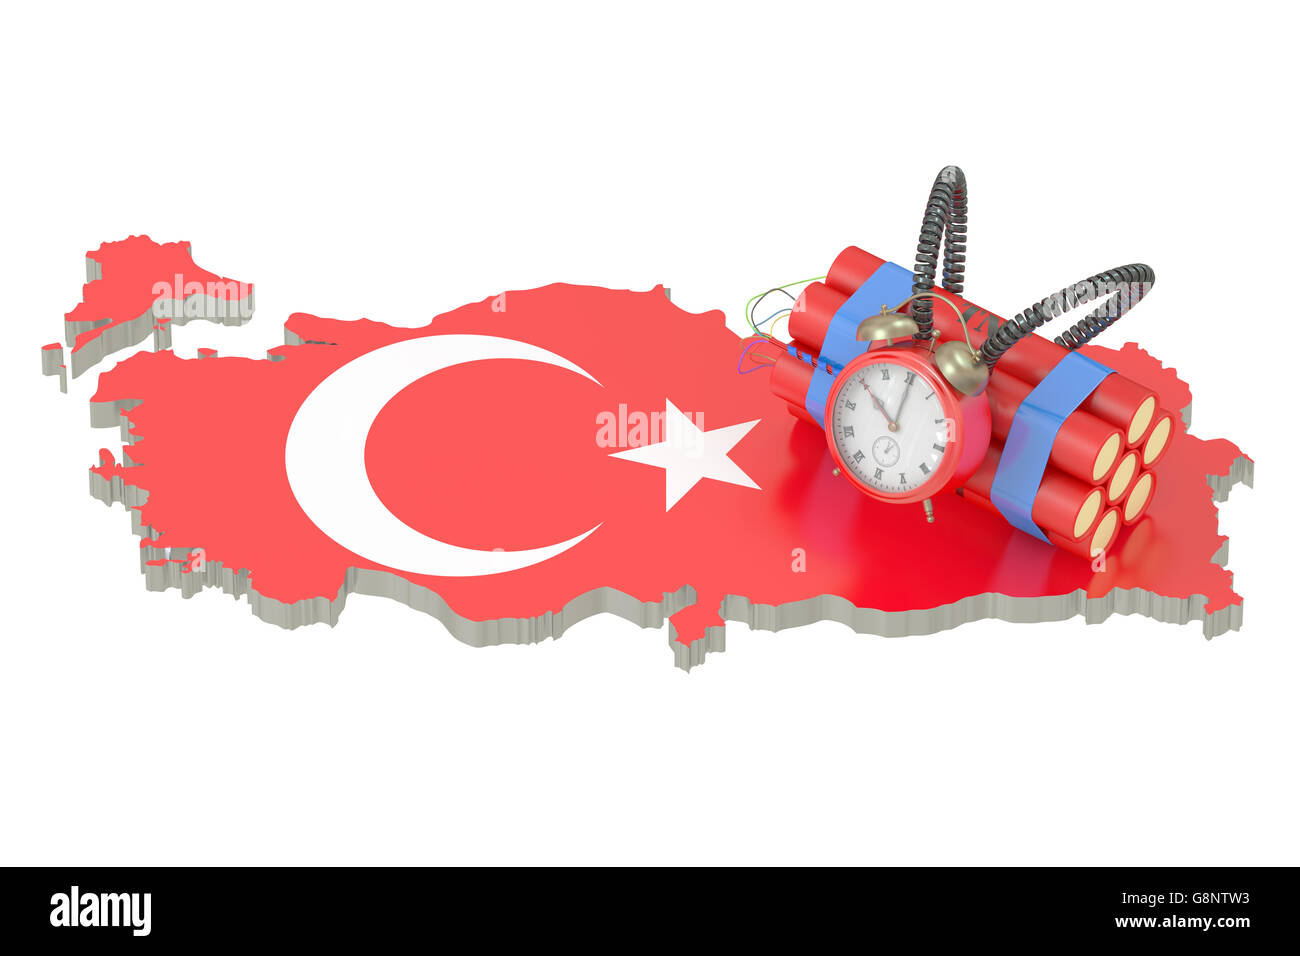 Turkey terror attacks concept, 3D rendering Stock Photo